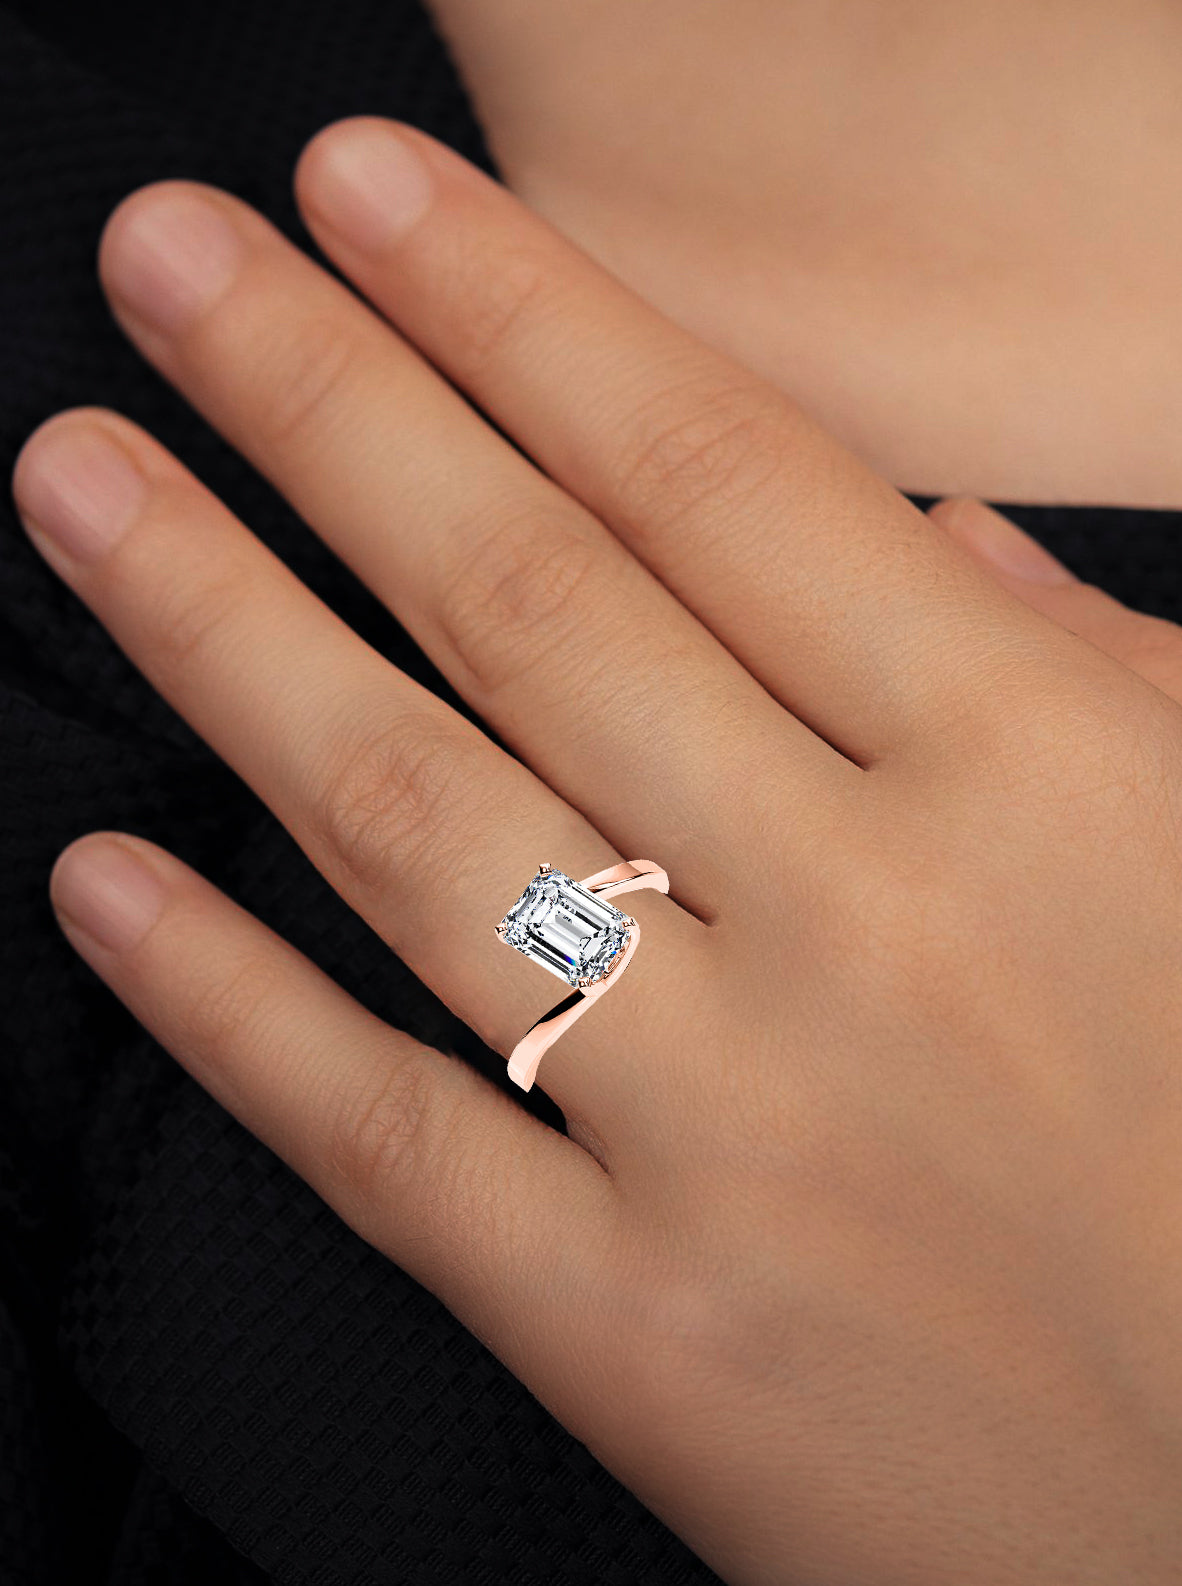 Huge Rock: 5CT Emerald Moissanite Engagement Ring